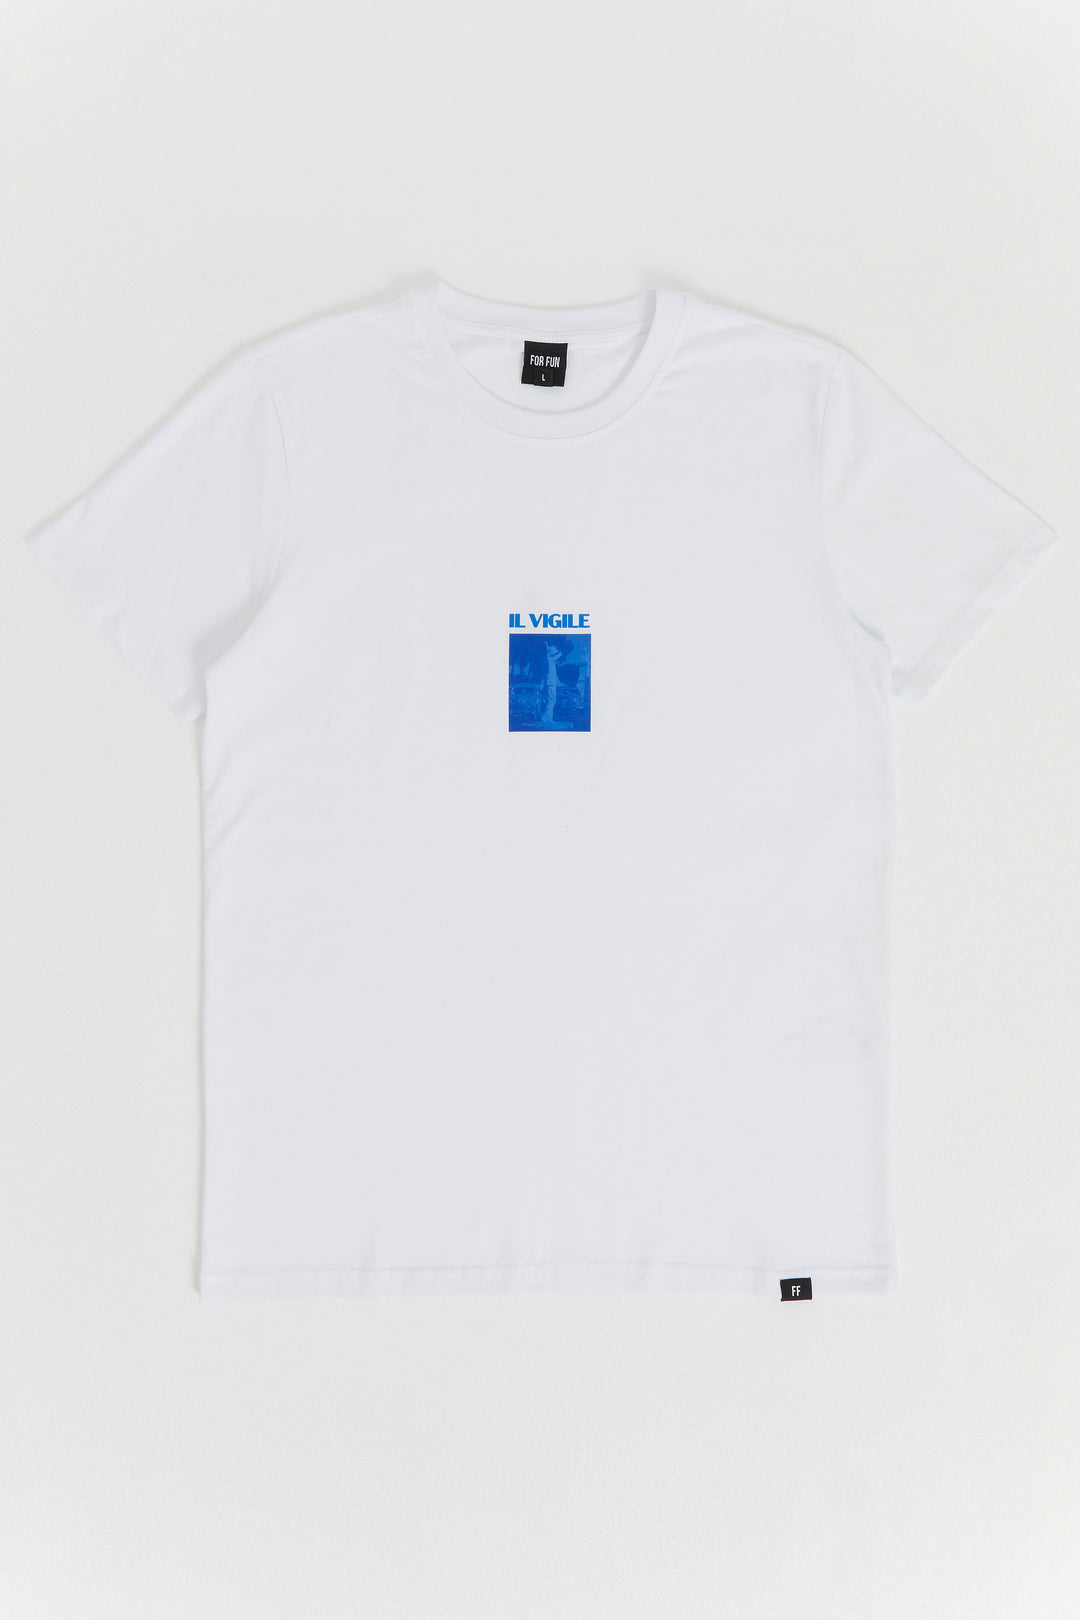 IL Vigile / T-shirt